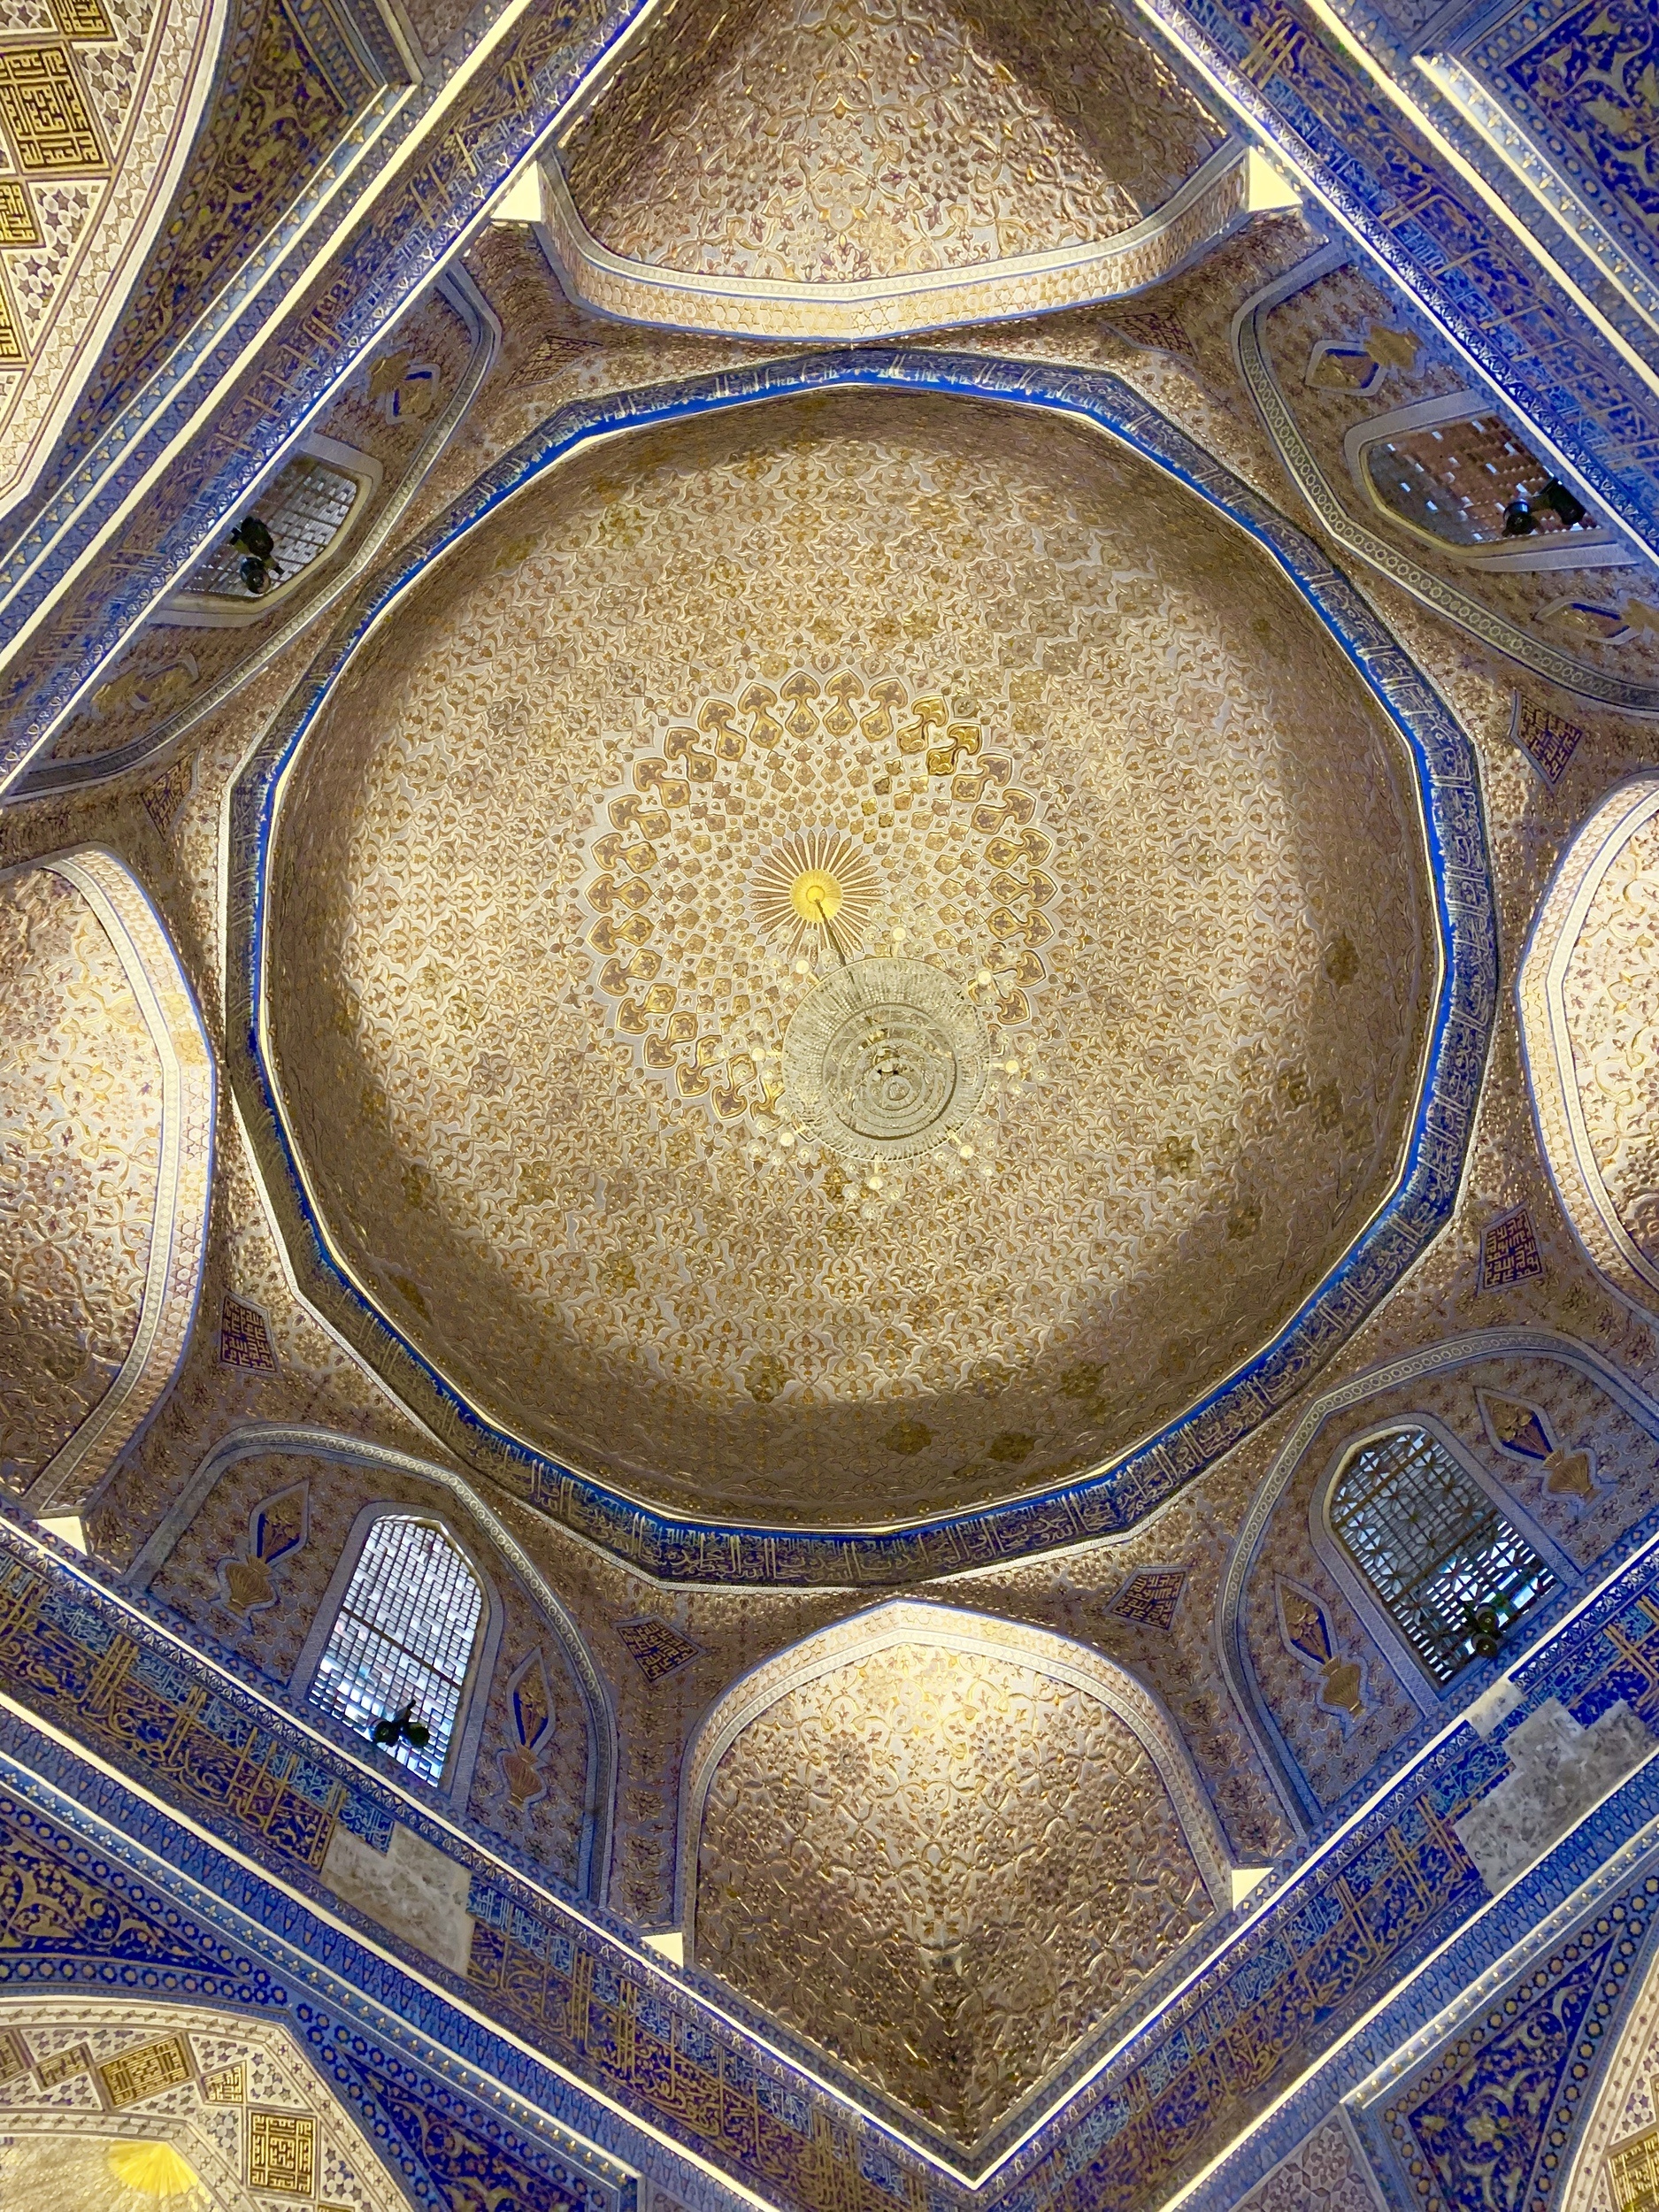 Things to do in Samarkand, Uzbekistan8